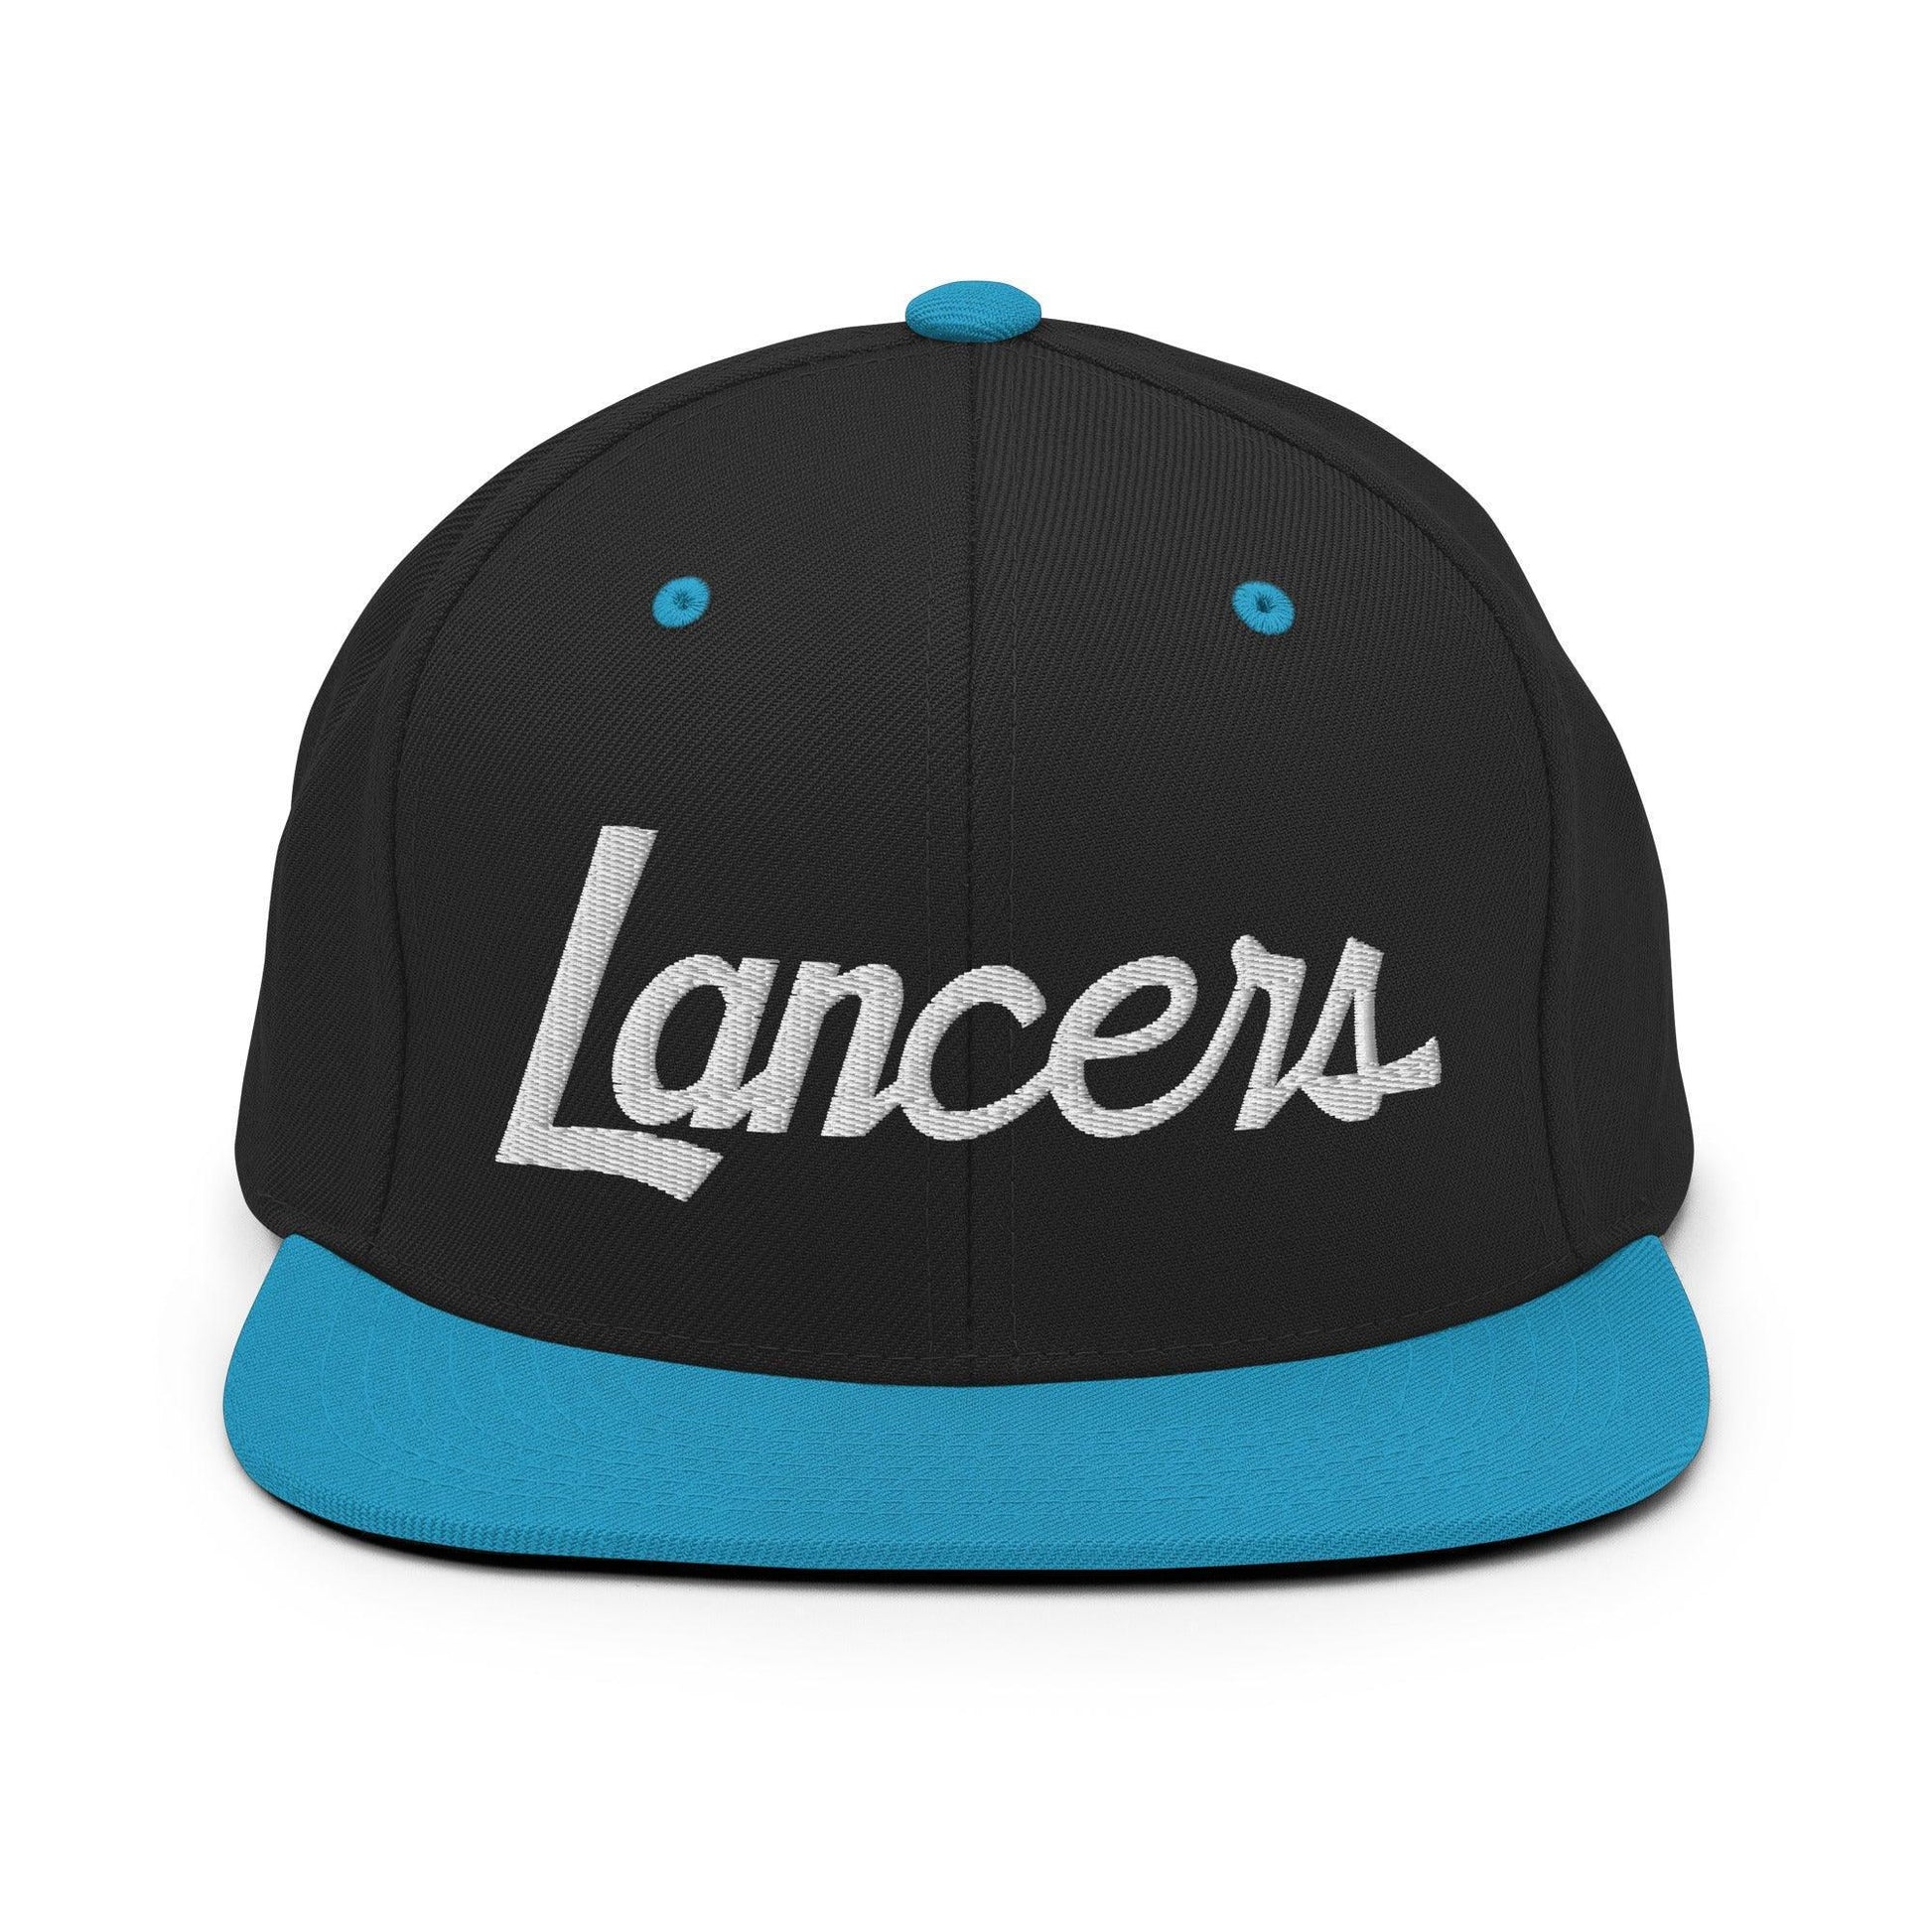 Lancers School Mascot Script Snapback Hat Black/ Teal